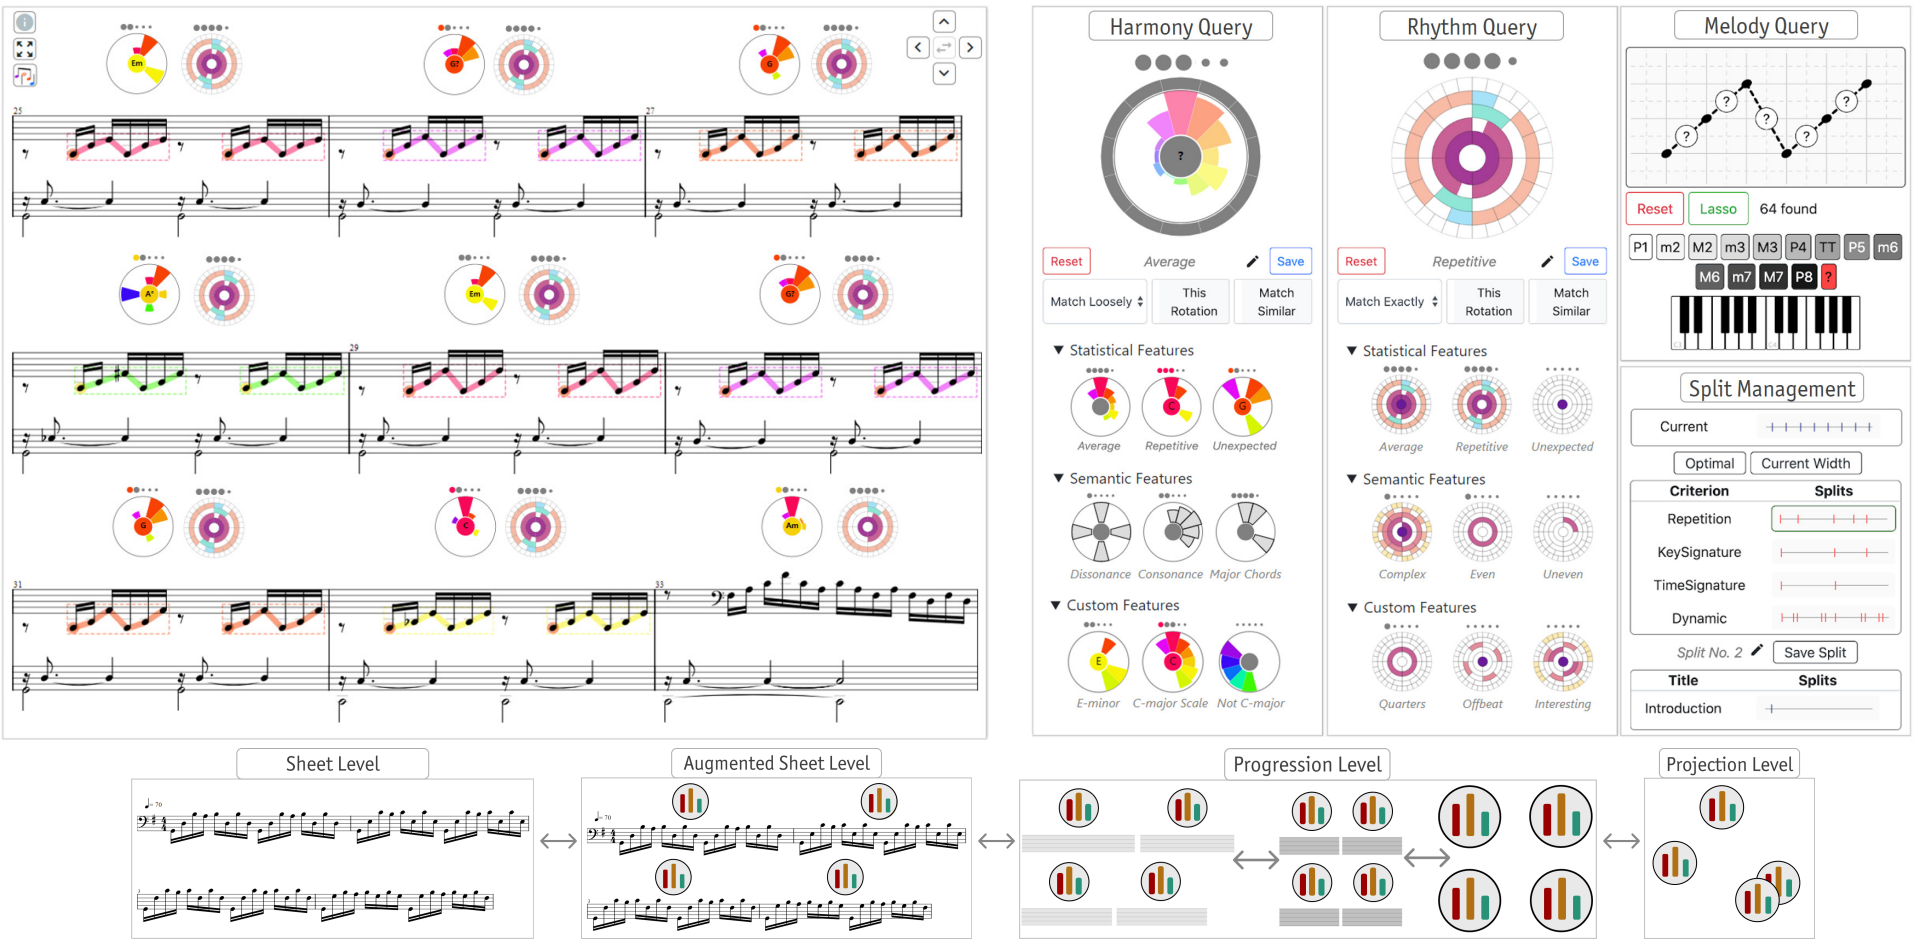 Augmenting Digital Sheet Music through Visual Analytics